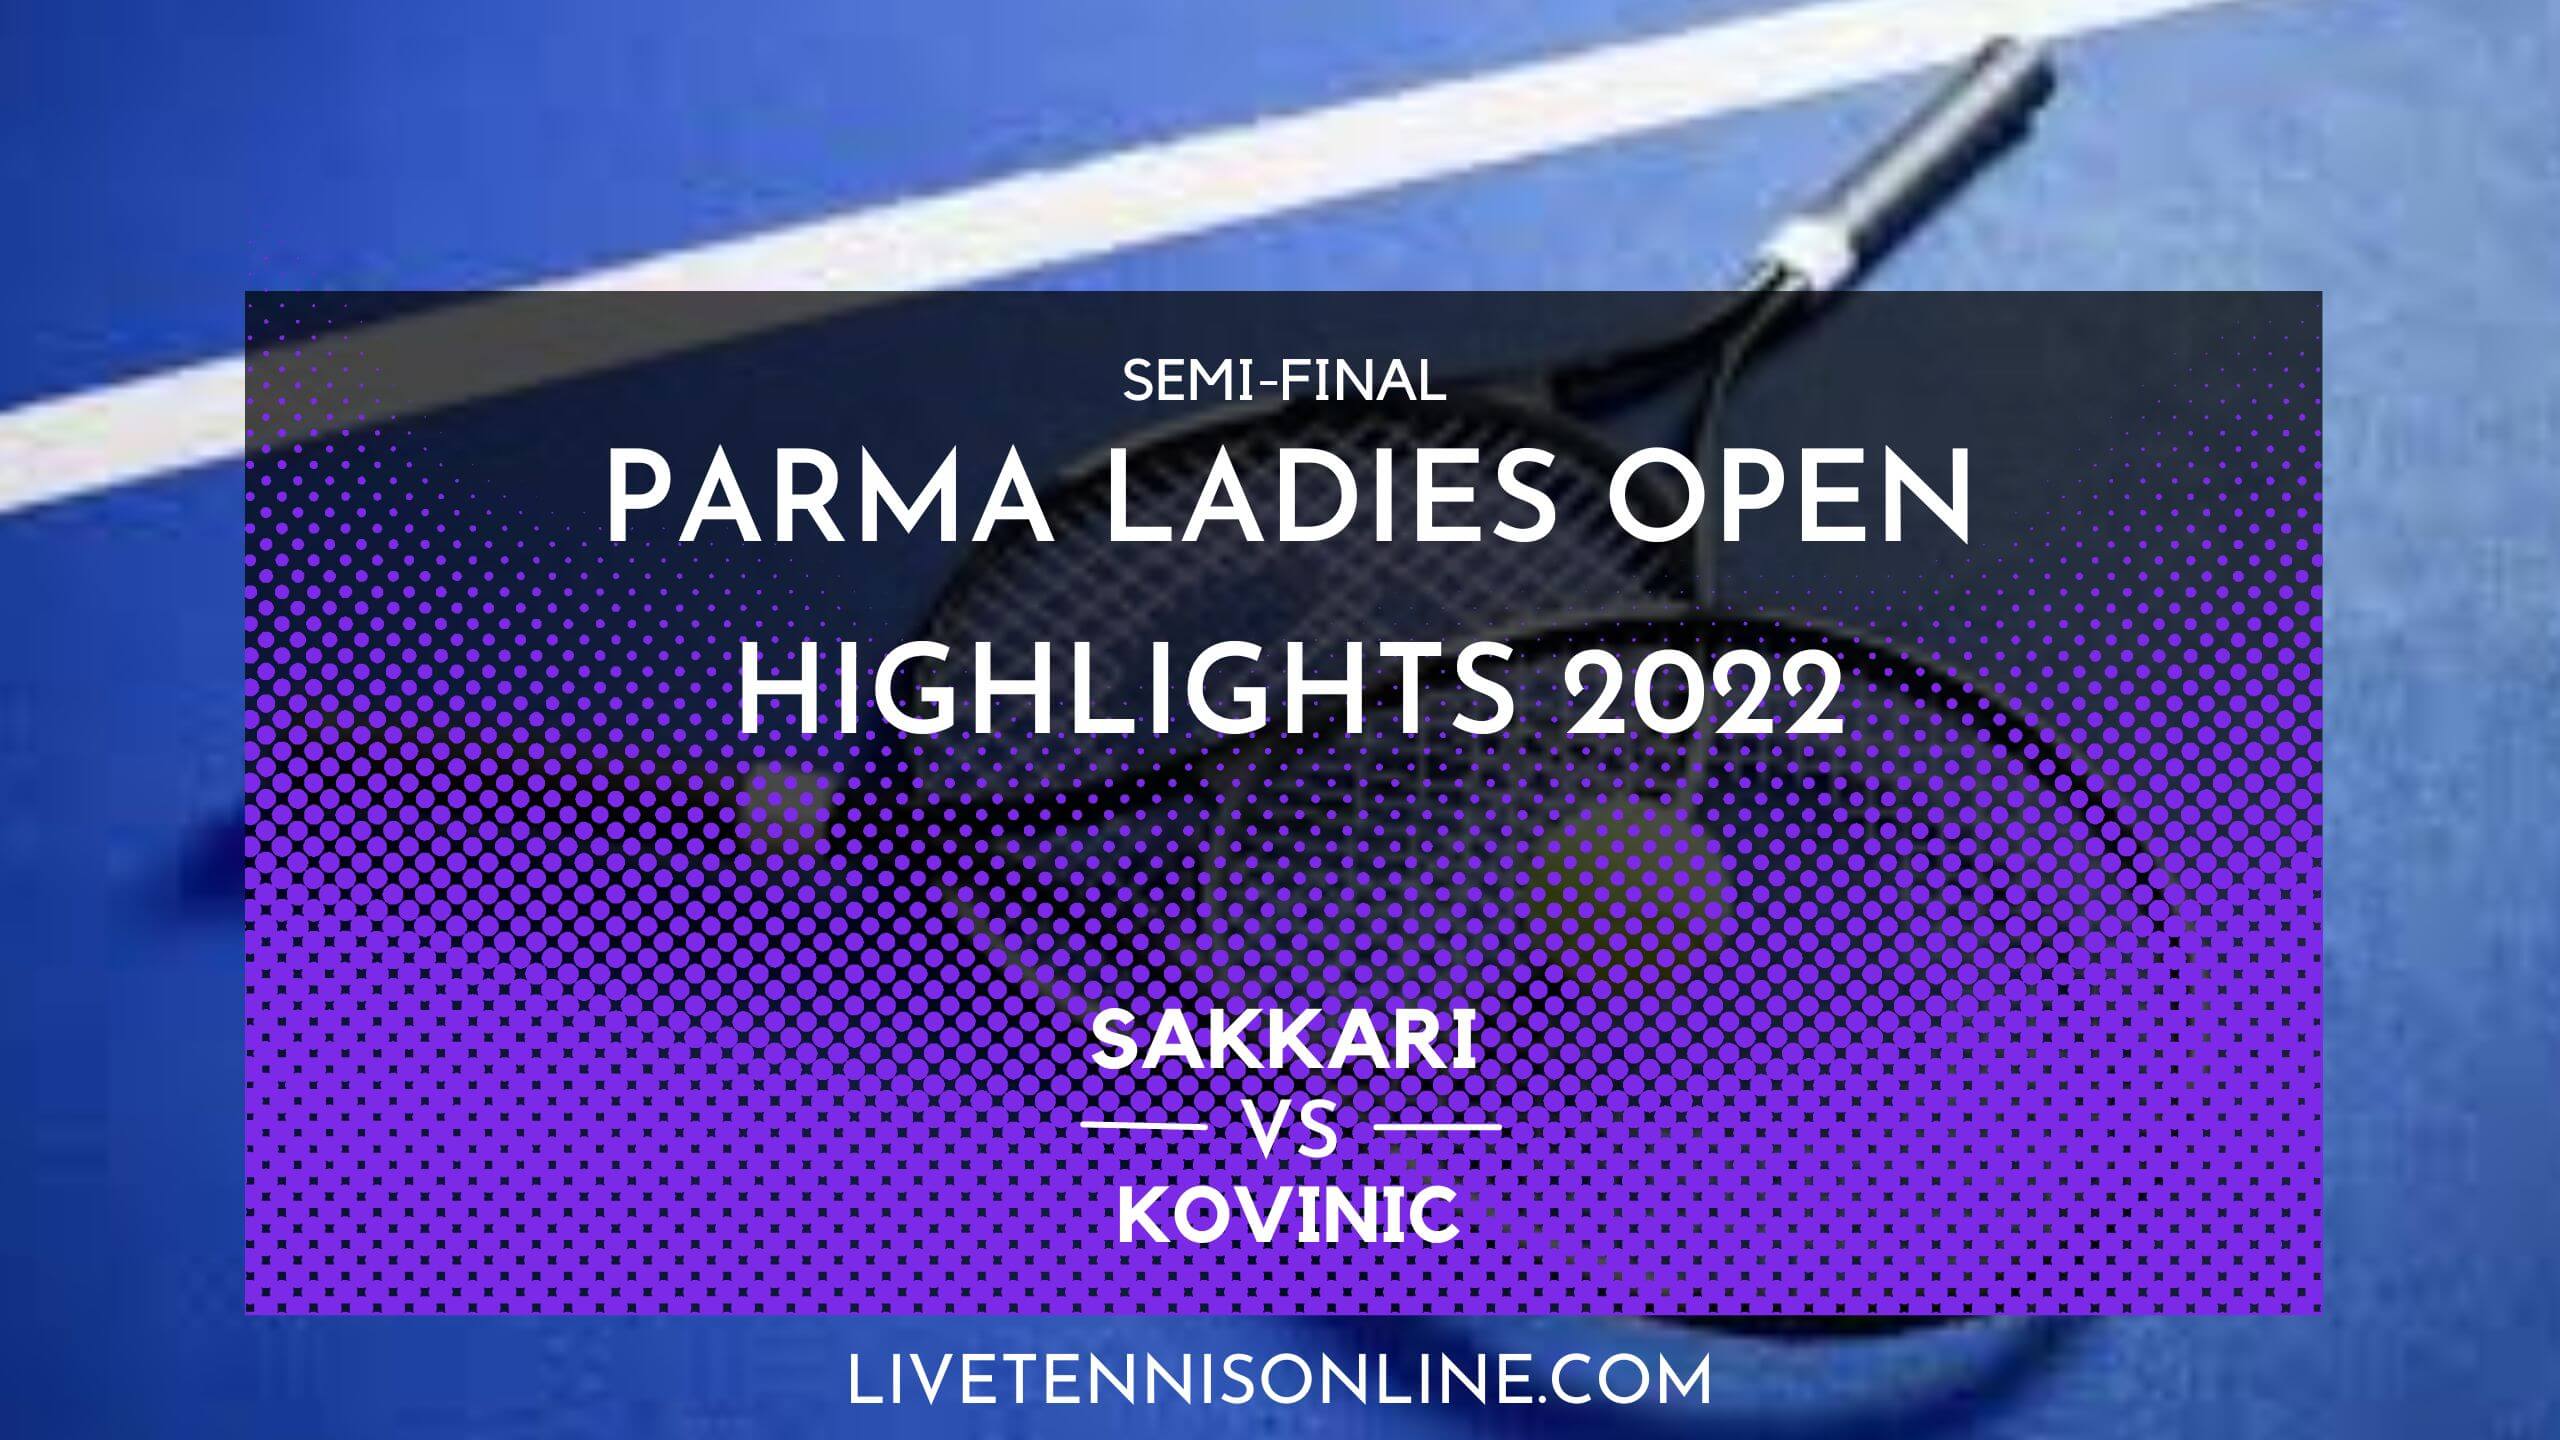 Sakkari Vs Kovinic SF Highlights 2022 Parma Ladies Open